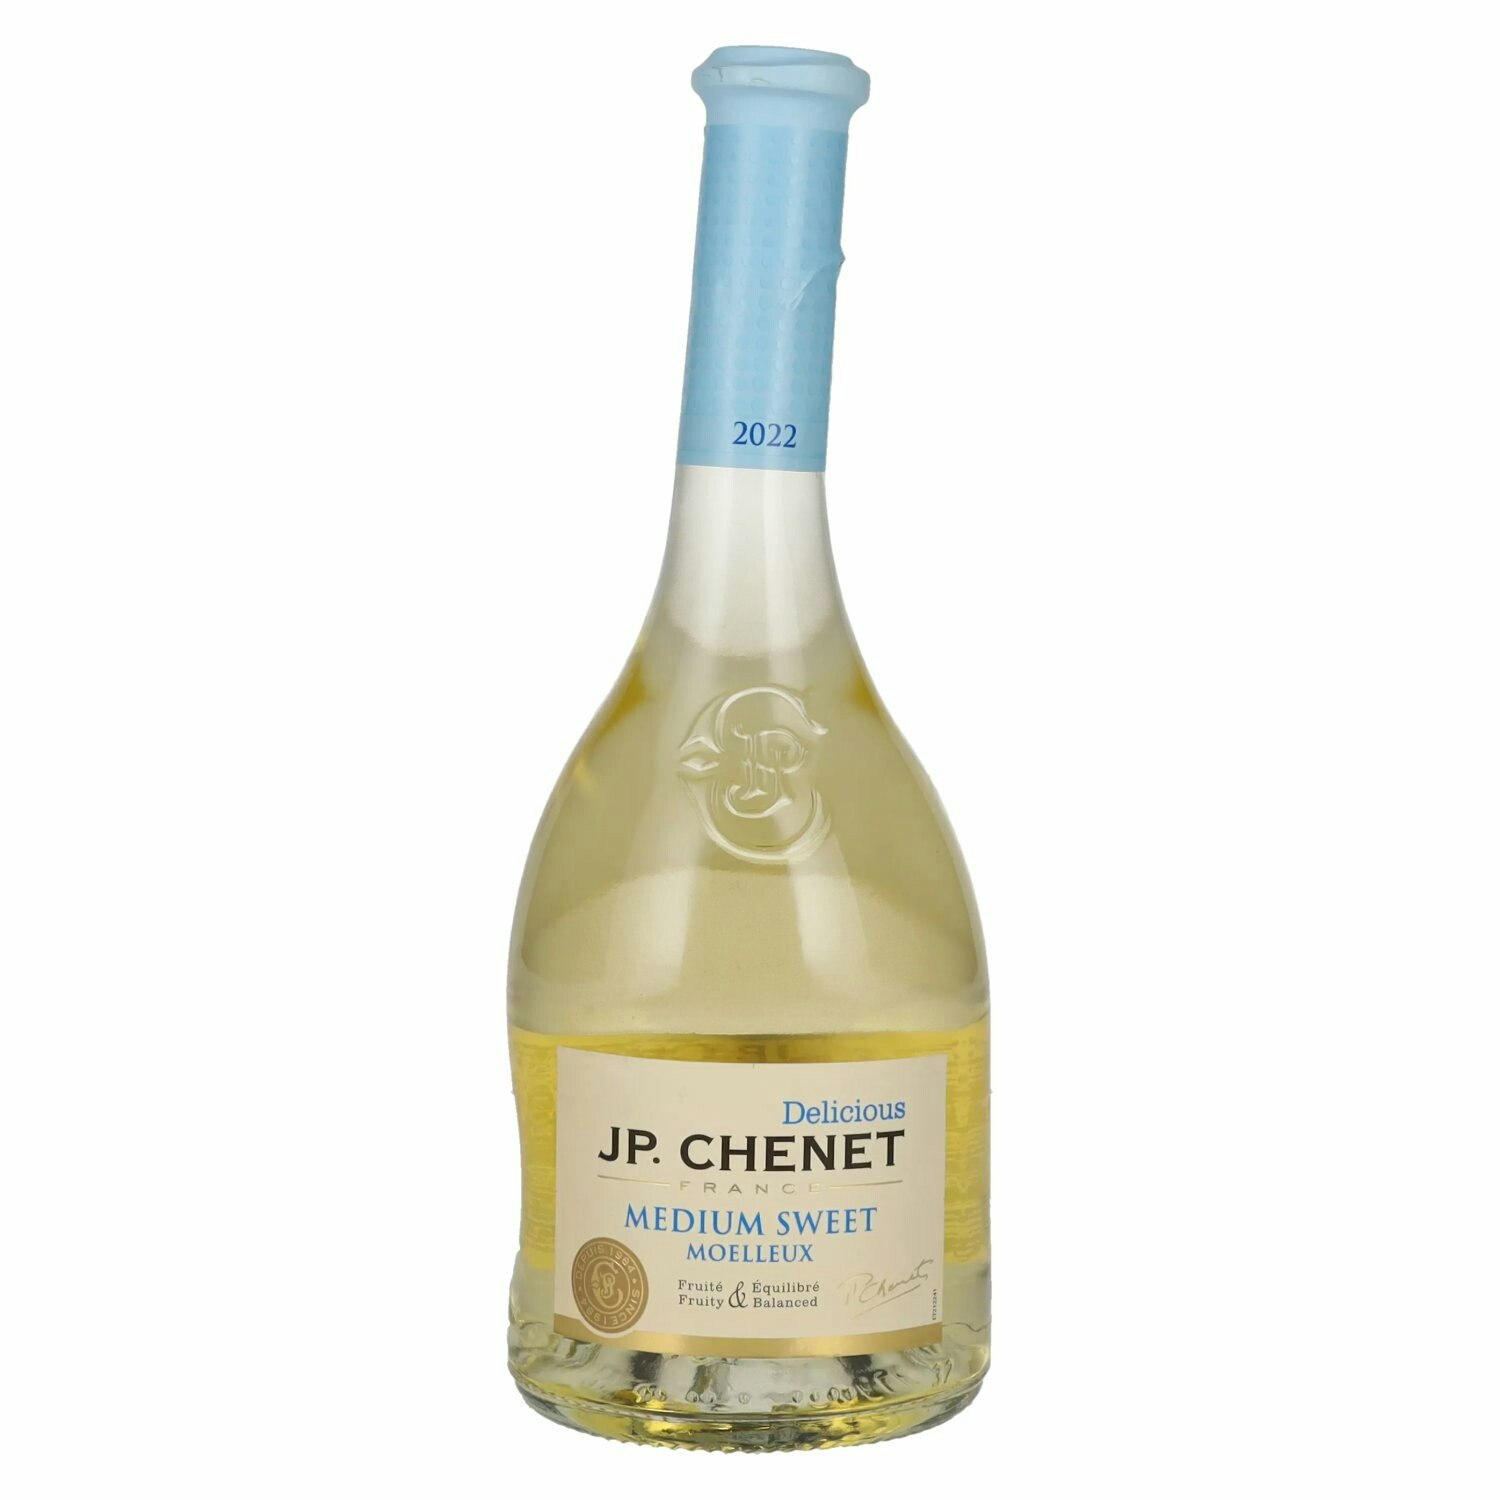 JP. Chenet Delicious MEDIUM SWEET Moelleux Blanc 2022 11,5% Vol. 0,75l